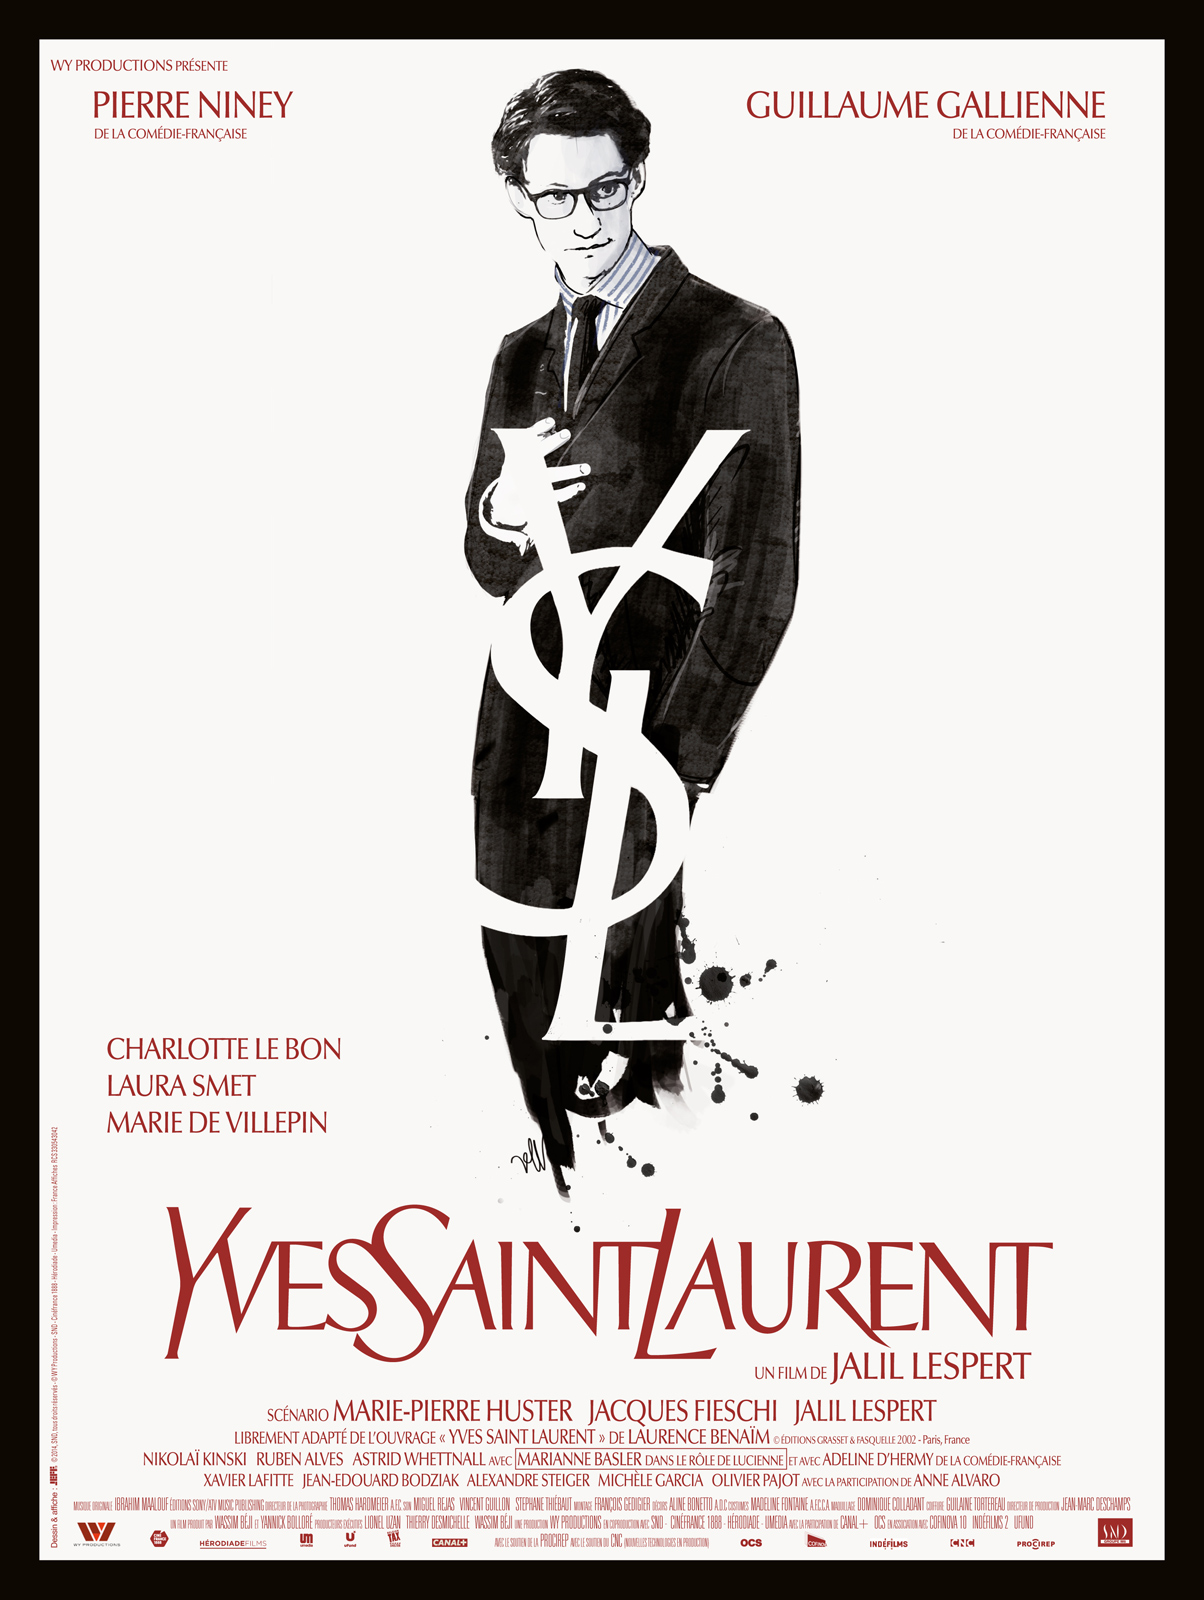 Yves Saint-Laurent Net Worth